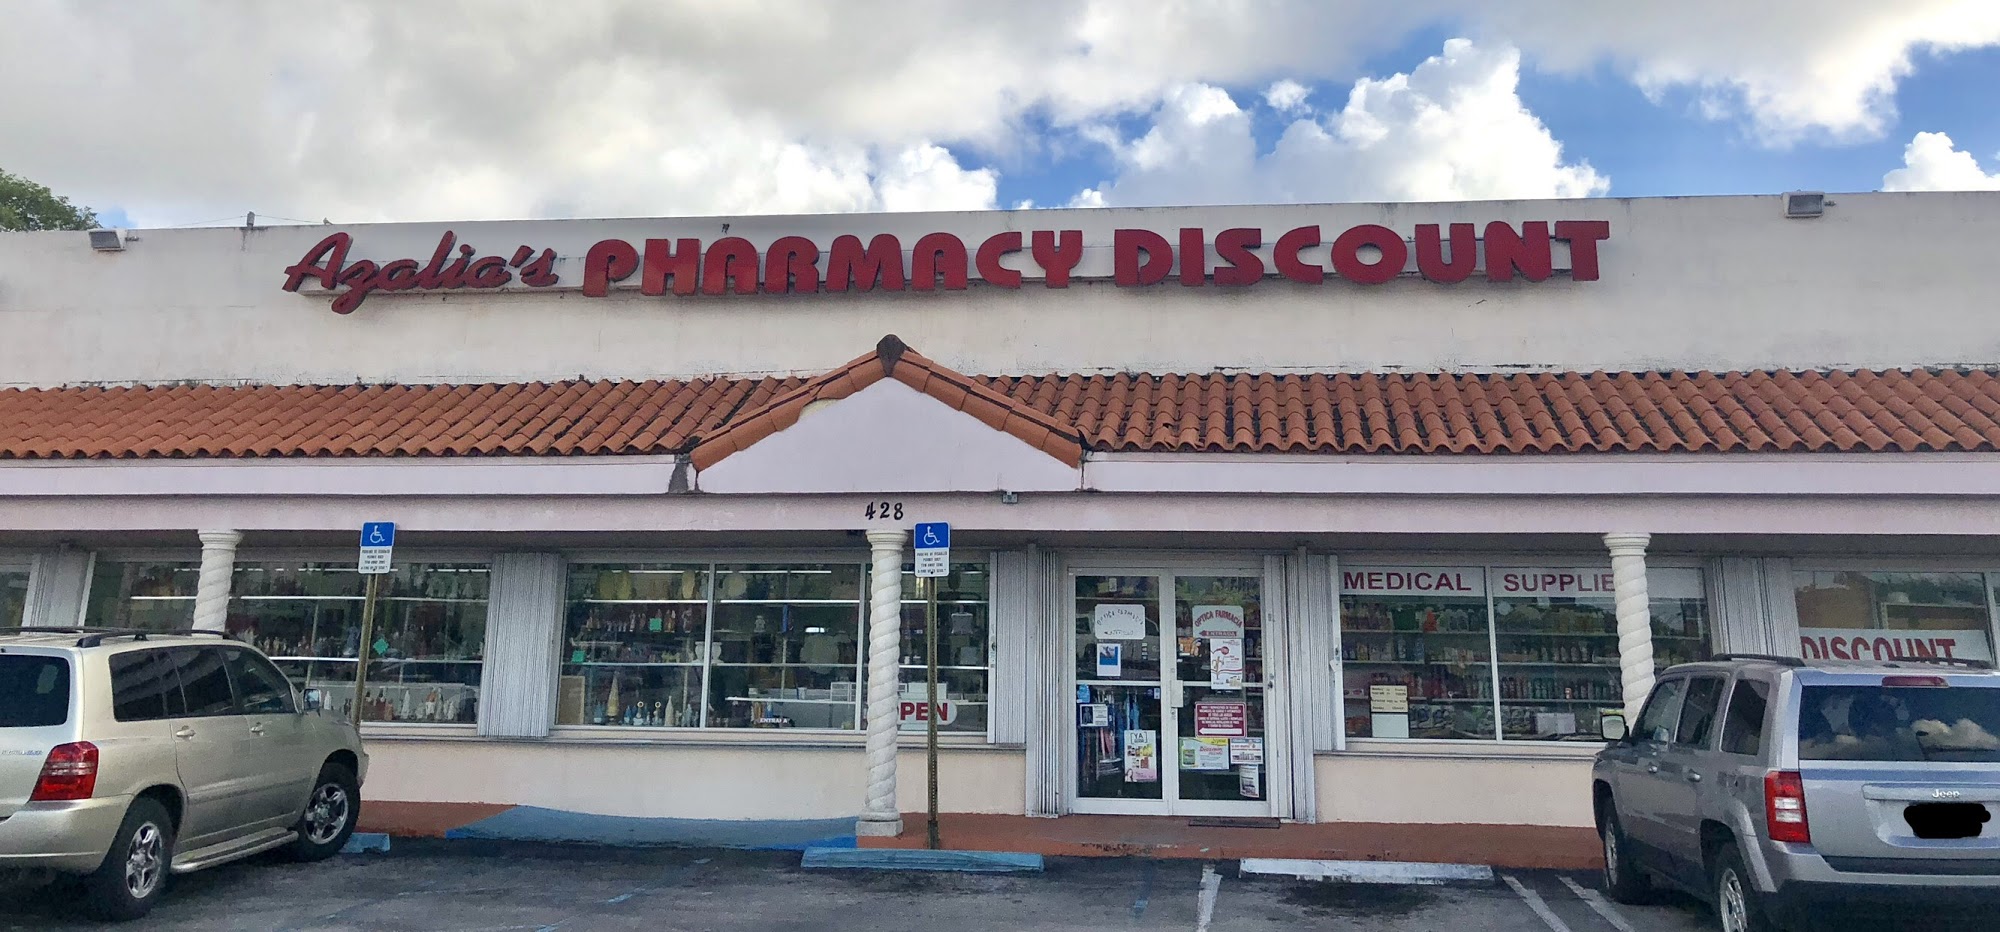 Azalia's Pharmacy Discount